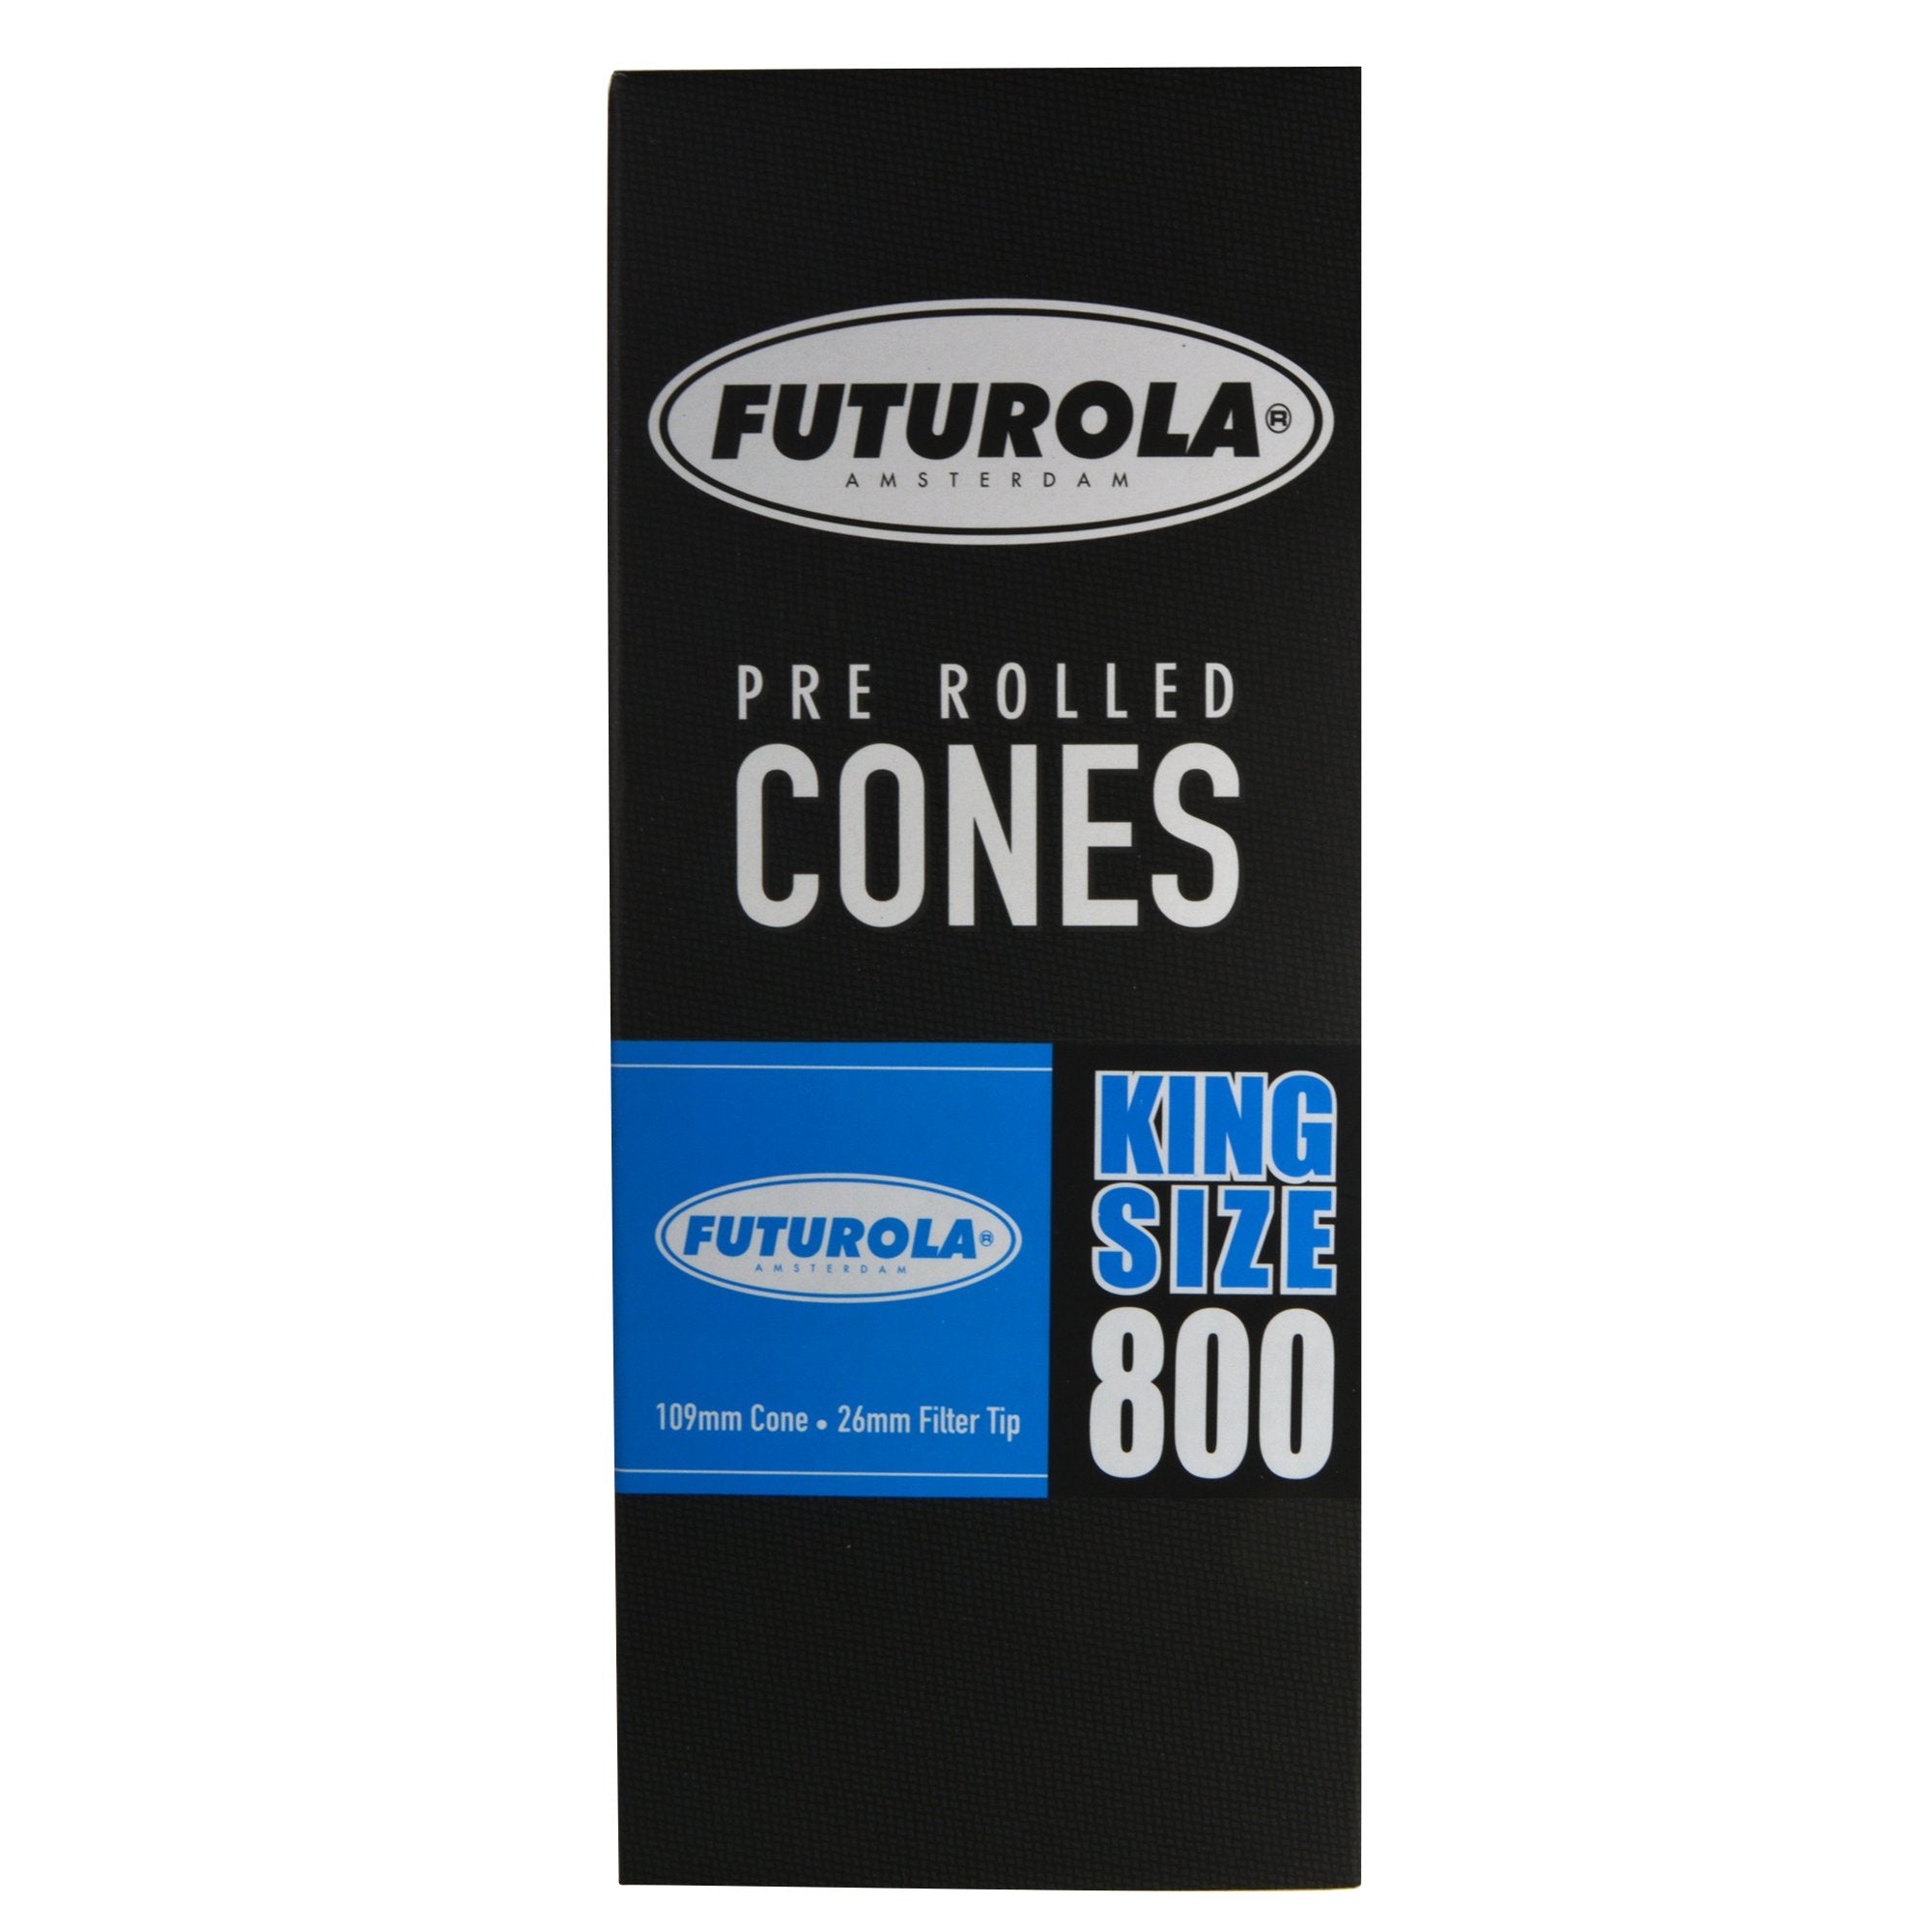 FUTUROLA | King Size Pre-Rolled Cones | 109mm - Classic White Paper - 800 Count - 3